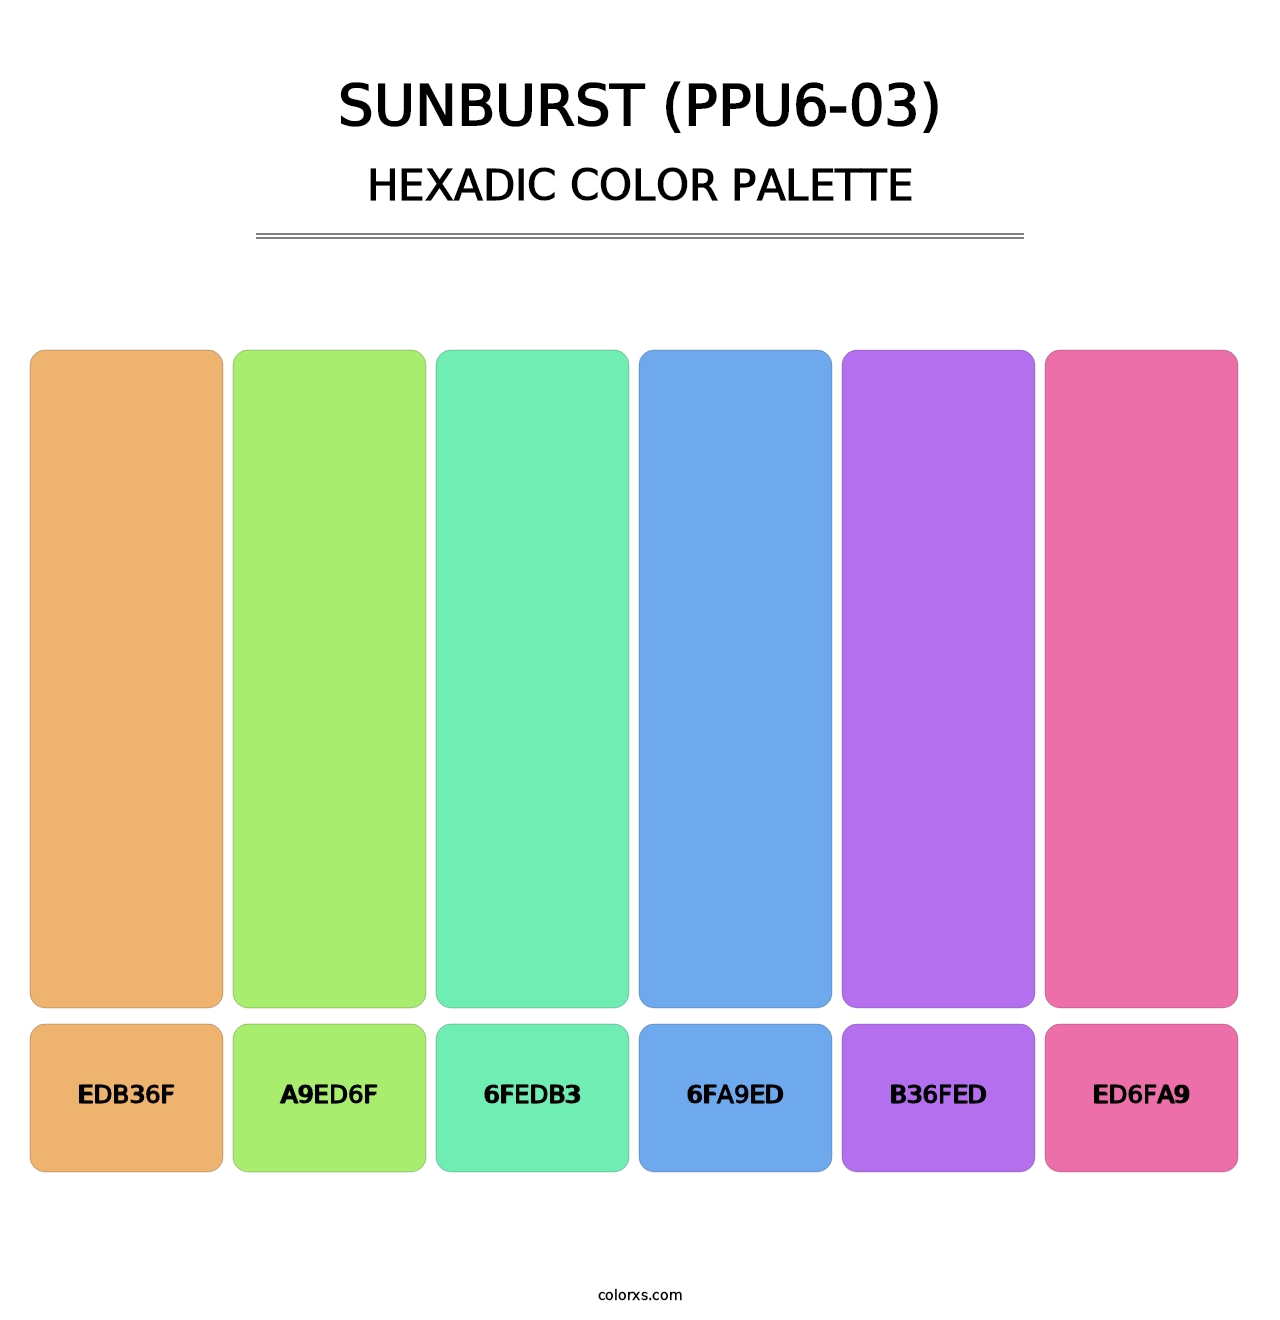 Sunburst (PPU6-03) - Hexadic Color Palette